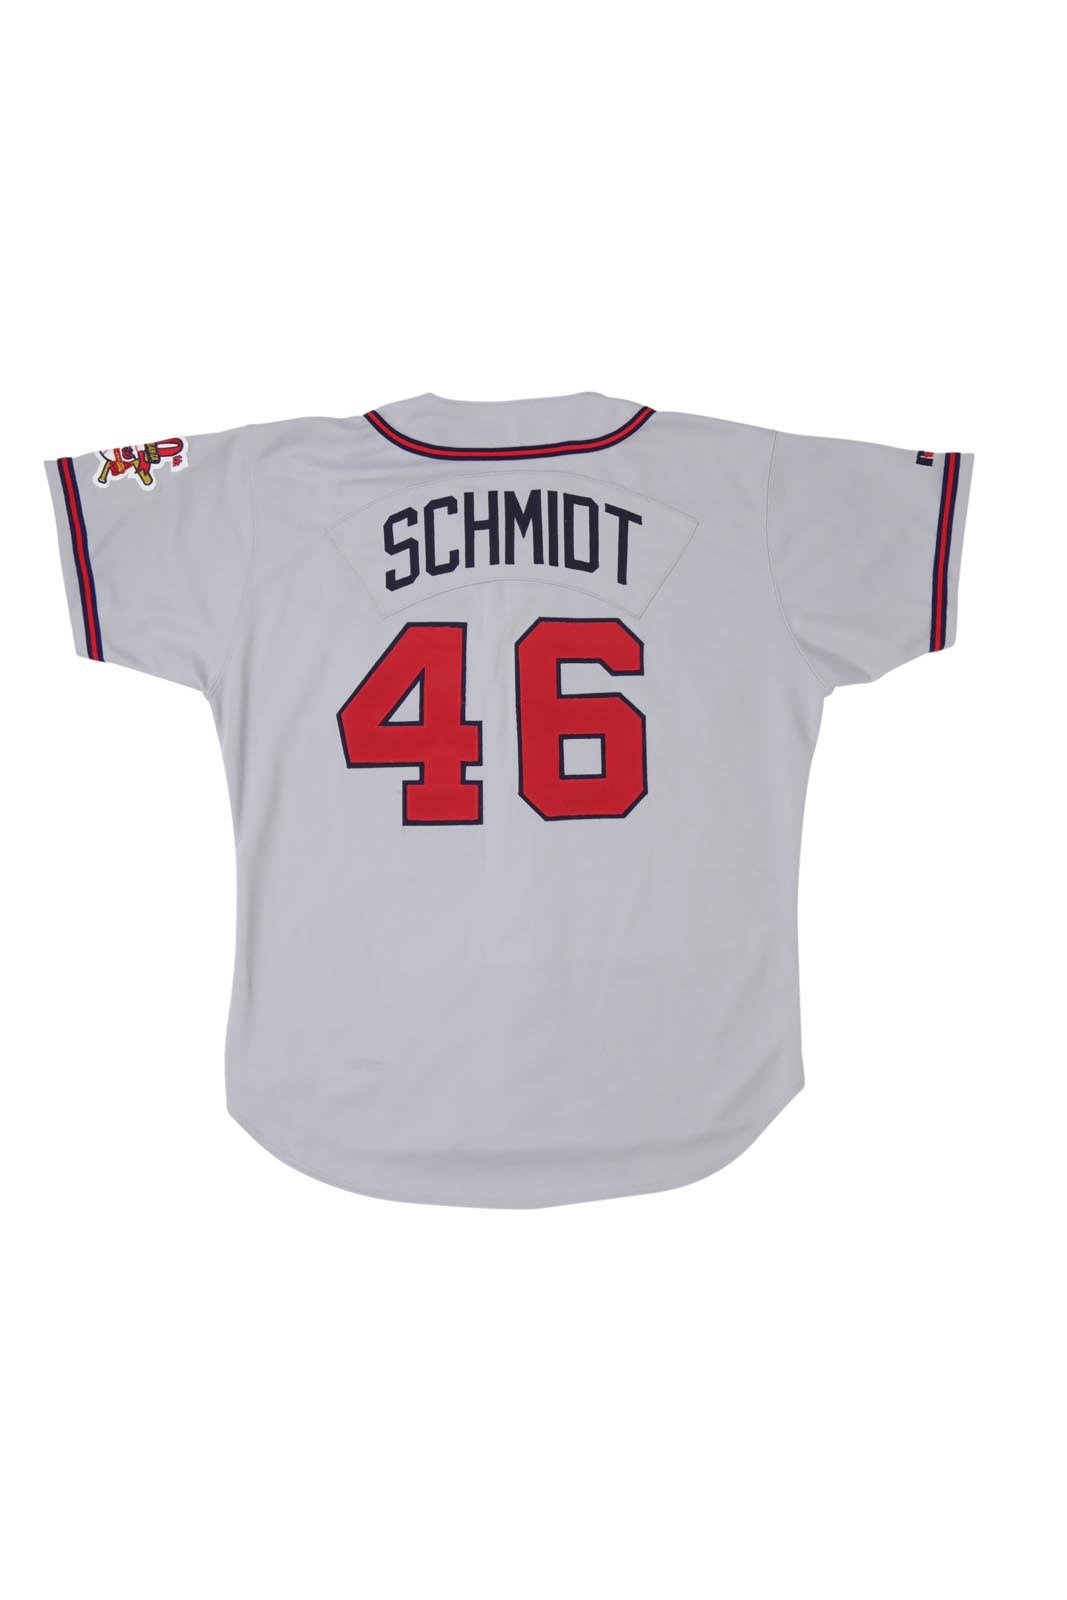 Baseball Equipment - 1995 Jason Schmidt Atlanta Braves Game Worn Rookie Jersey - Purchased from Atlanta Braves